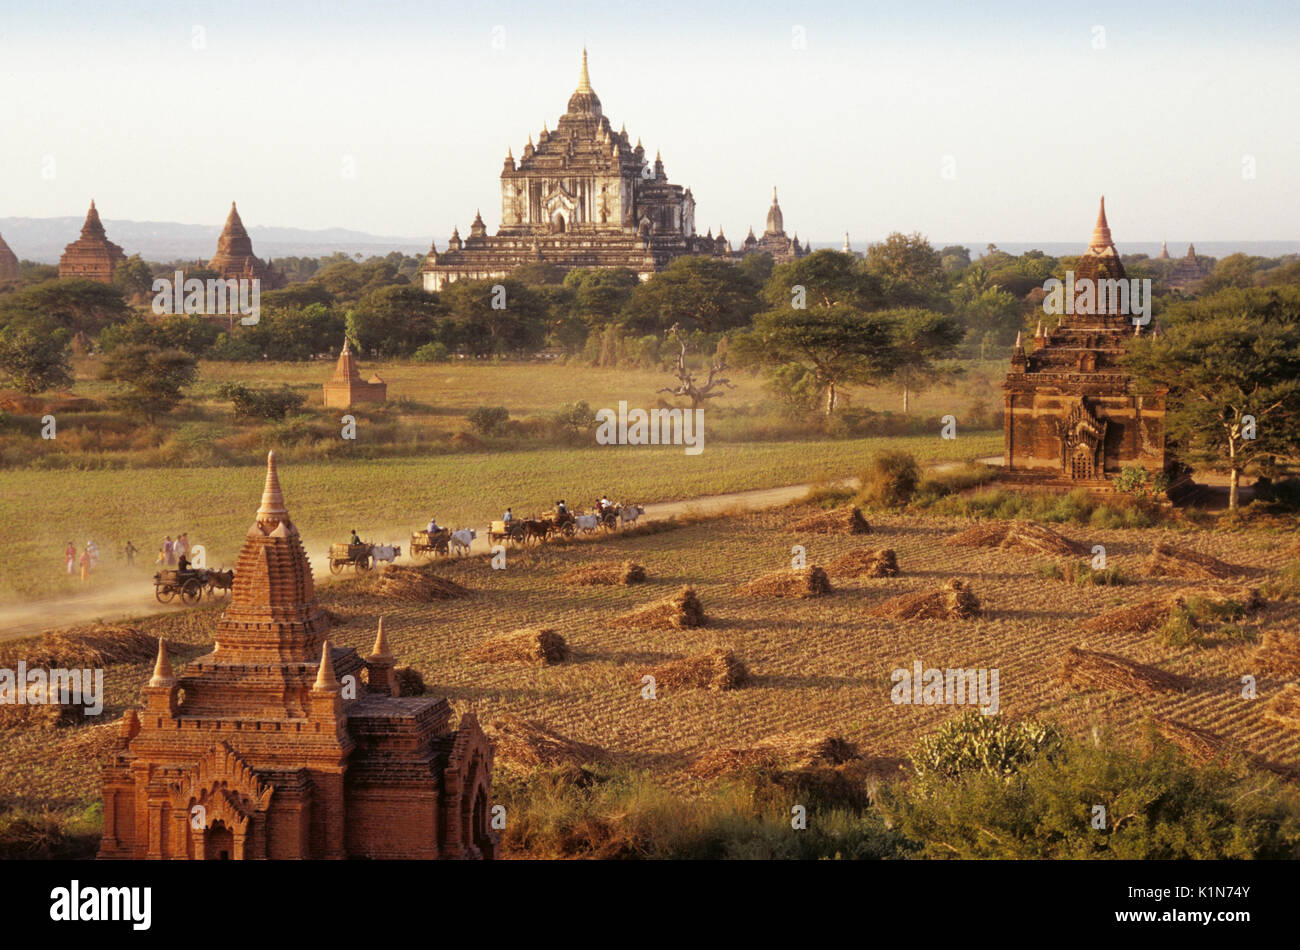 Thatbyinnyu Temple and pagodas on the plain (viewed from Shwesandaw Pagoda), Pagan (Bagan), Burma (Myanmar) Stock Photo